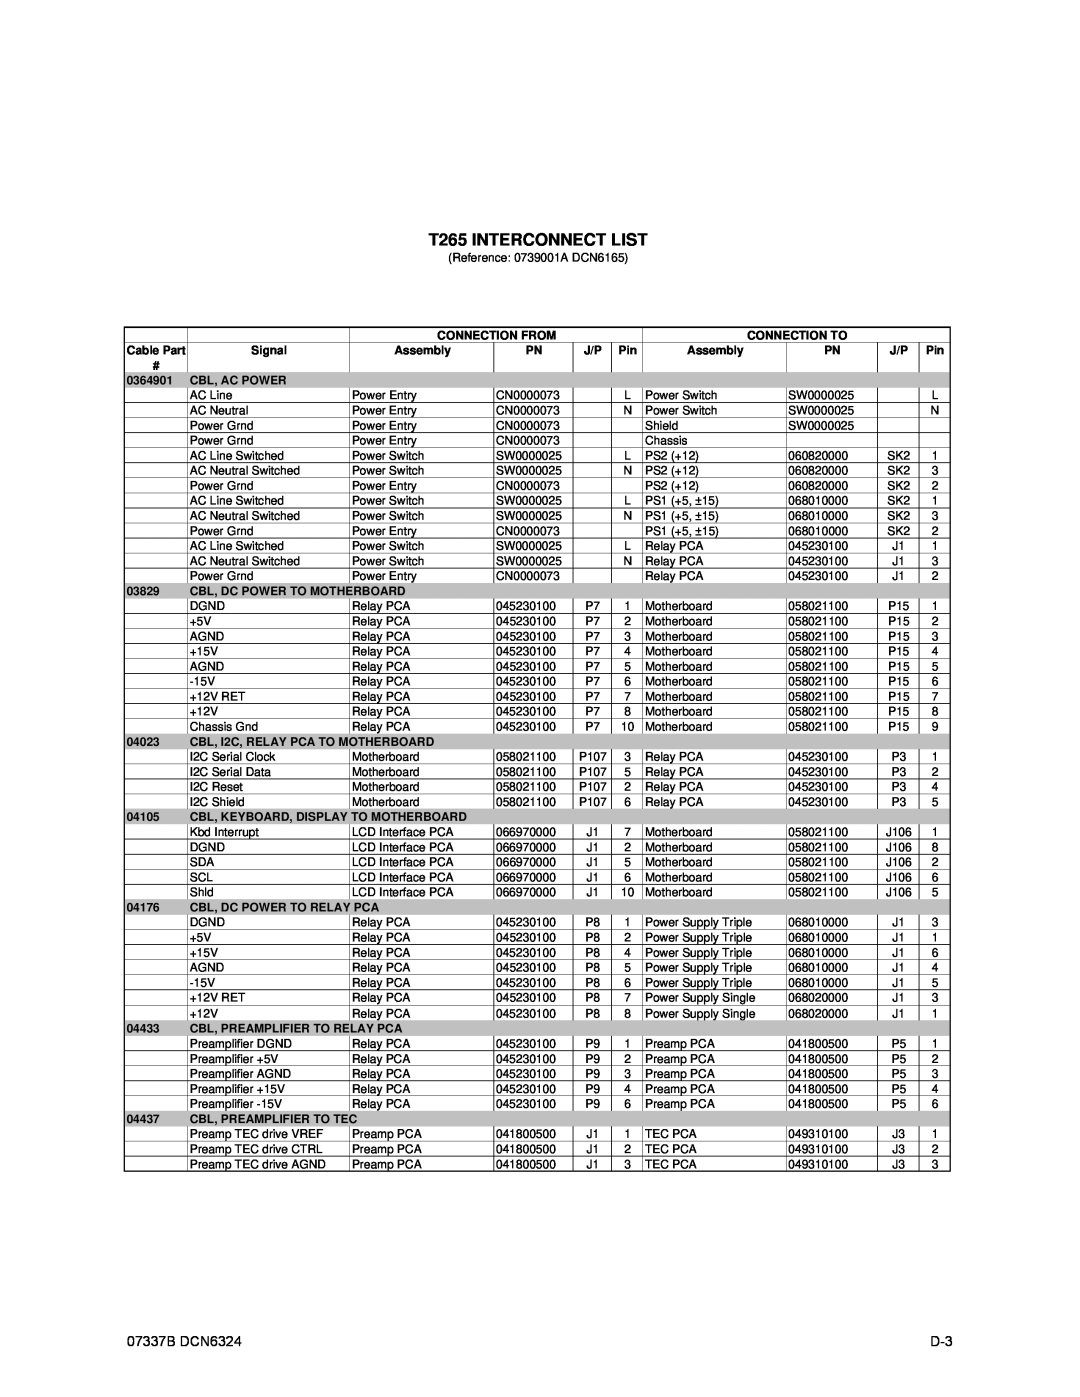 Teledyne manual T265 INTERCONNECT LIST, 07337B DCN6324 